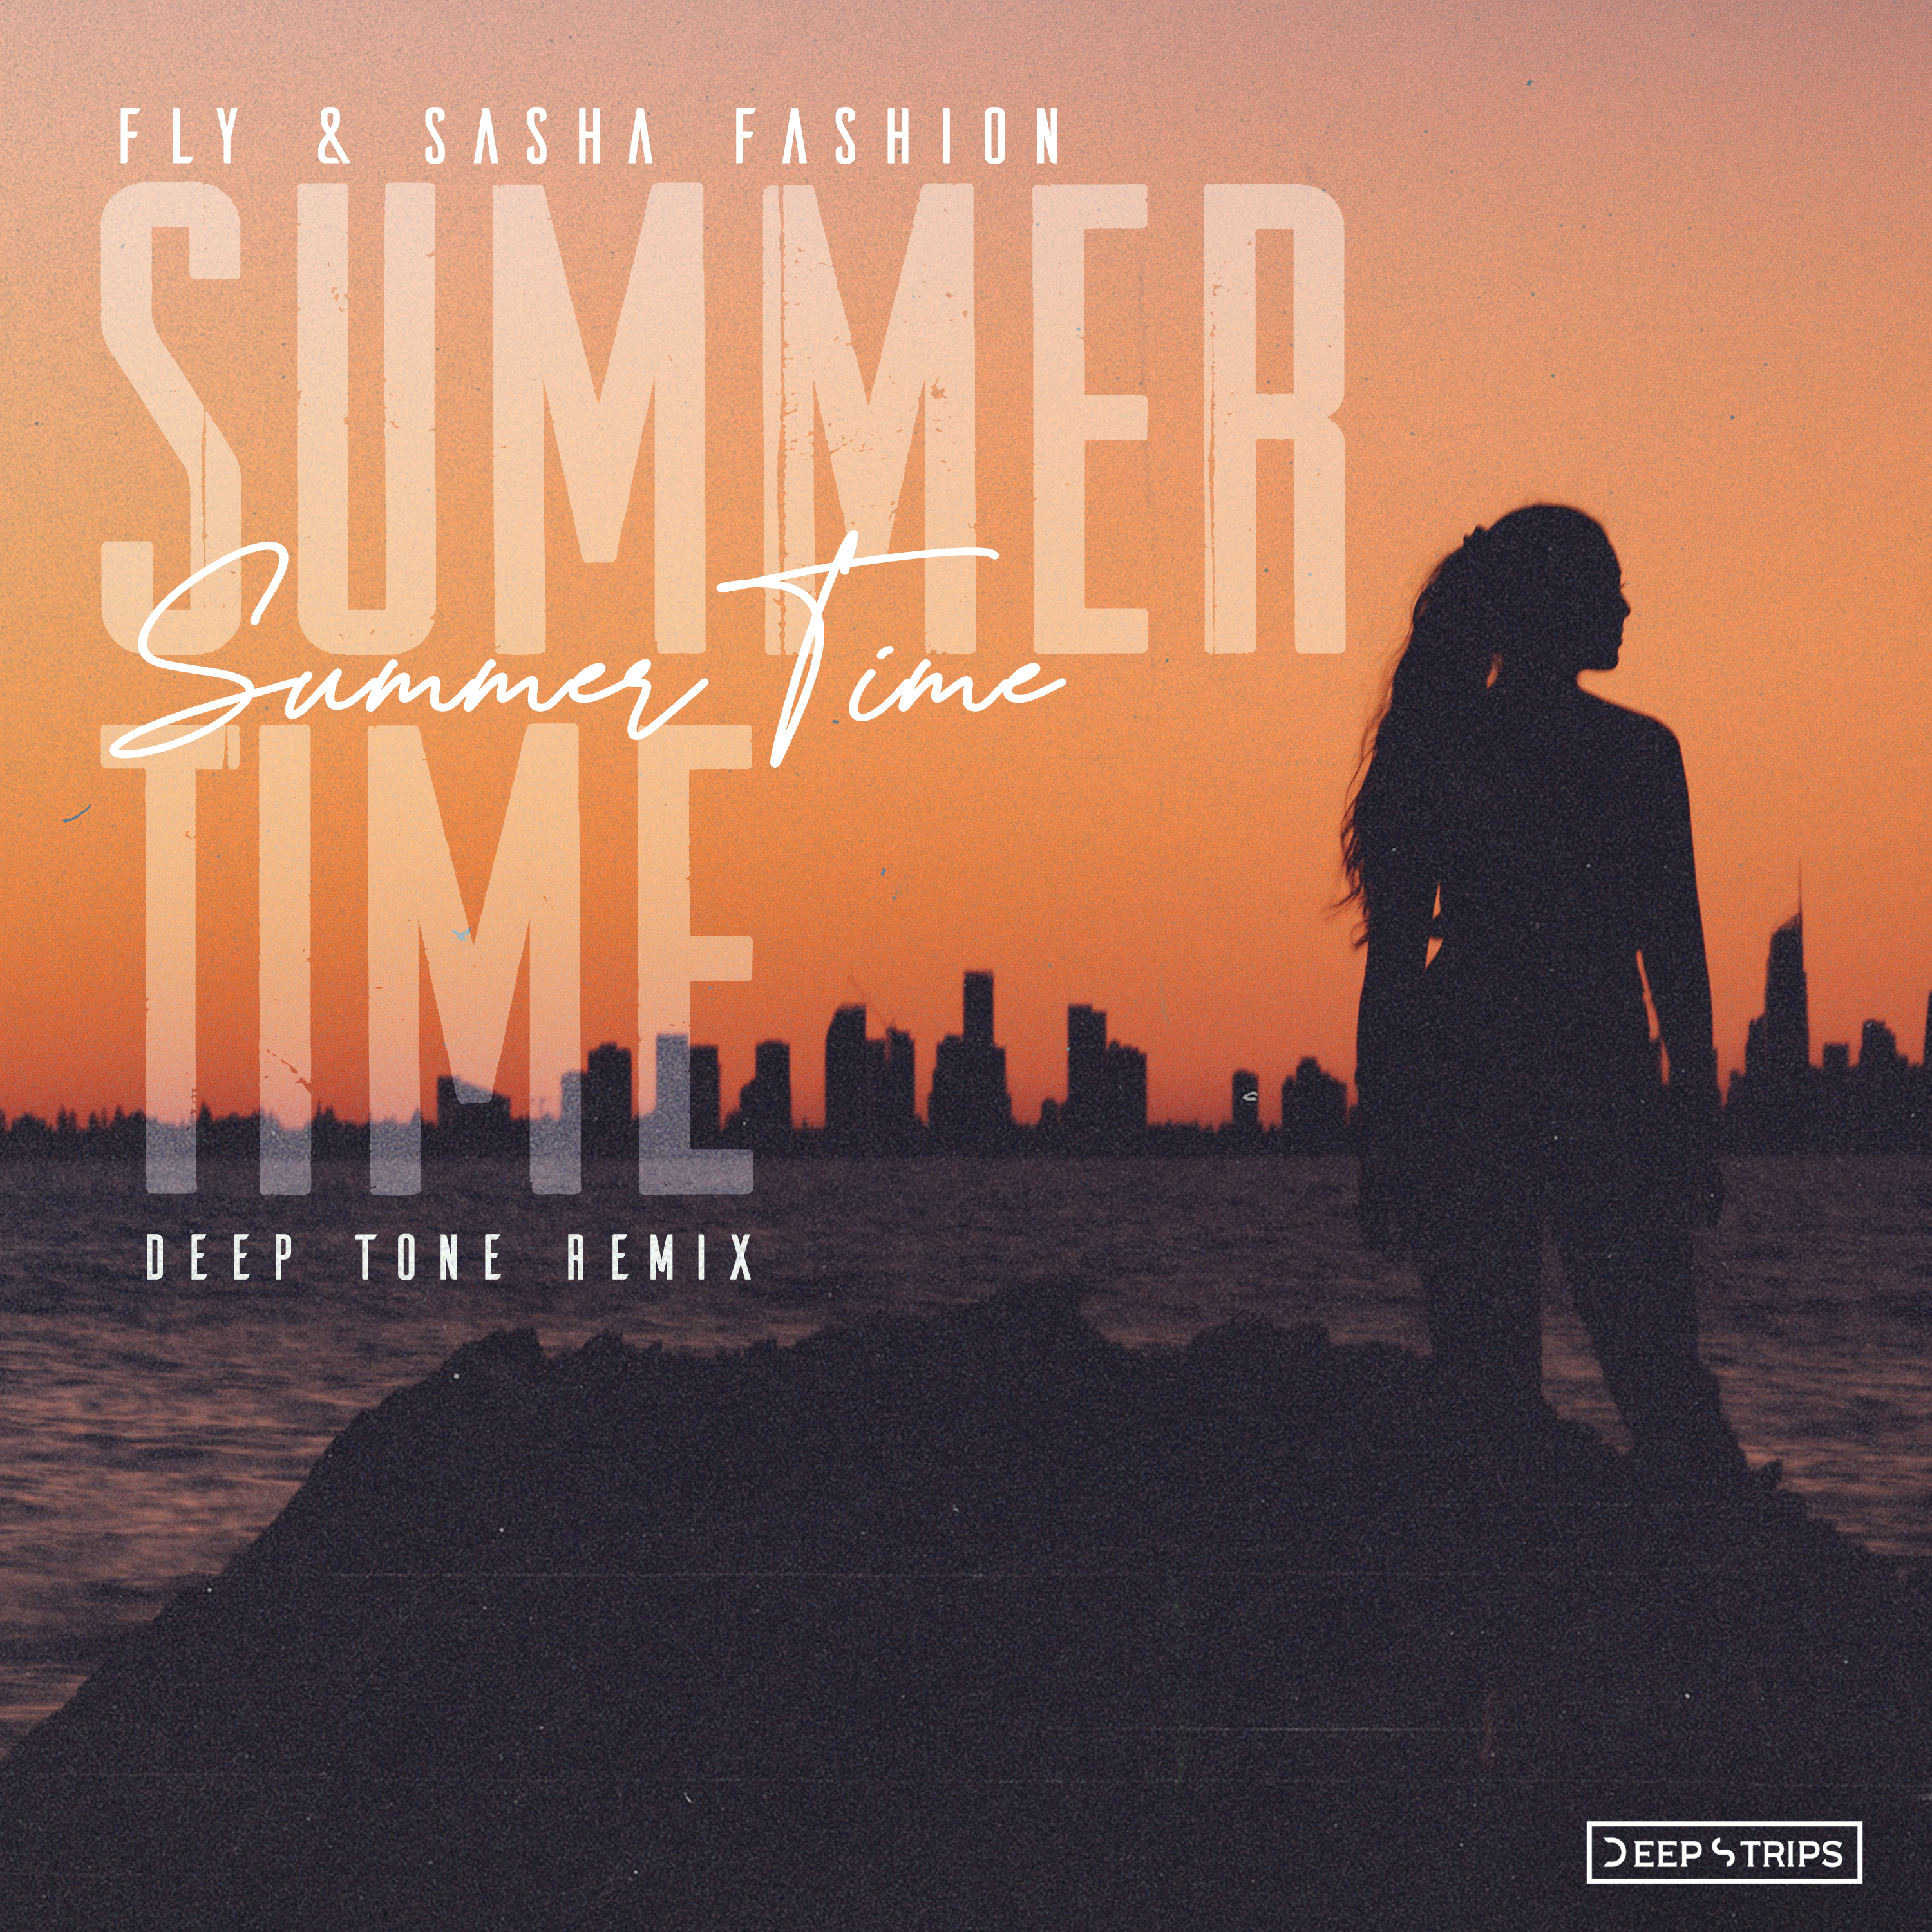 Tone remix. Fly Sasha Fashion. Summertime минус. Fly & Sasha Fashion - Summer time (Original Mix). Summertime перевод.